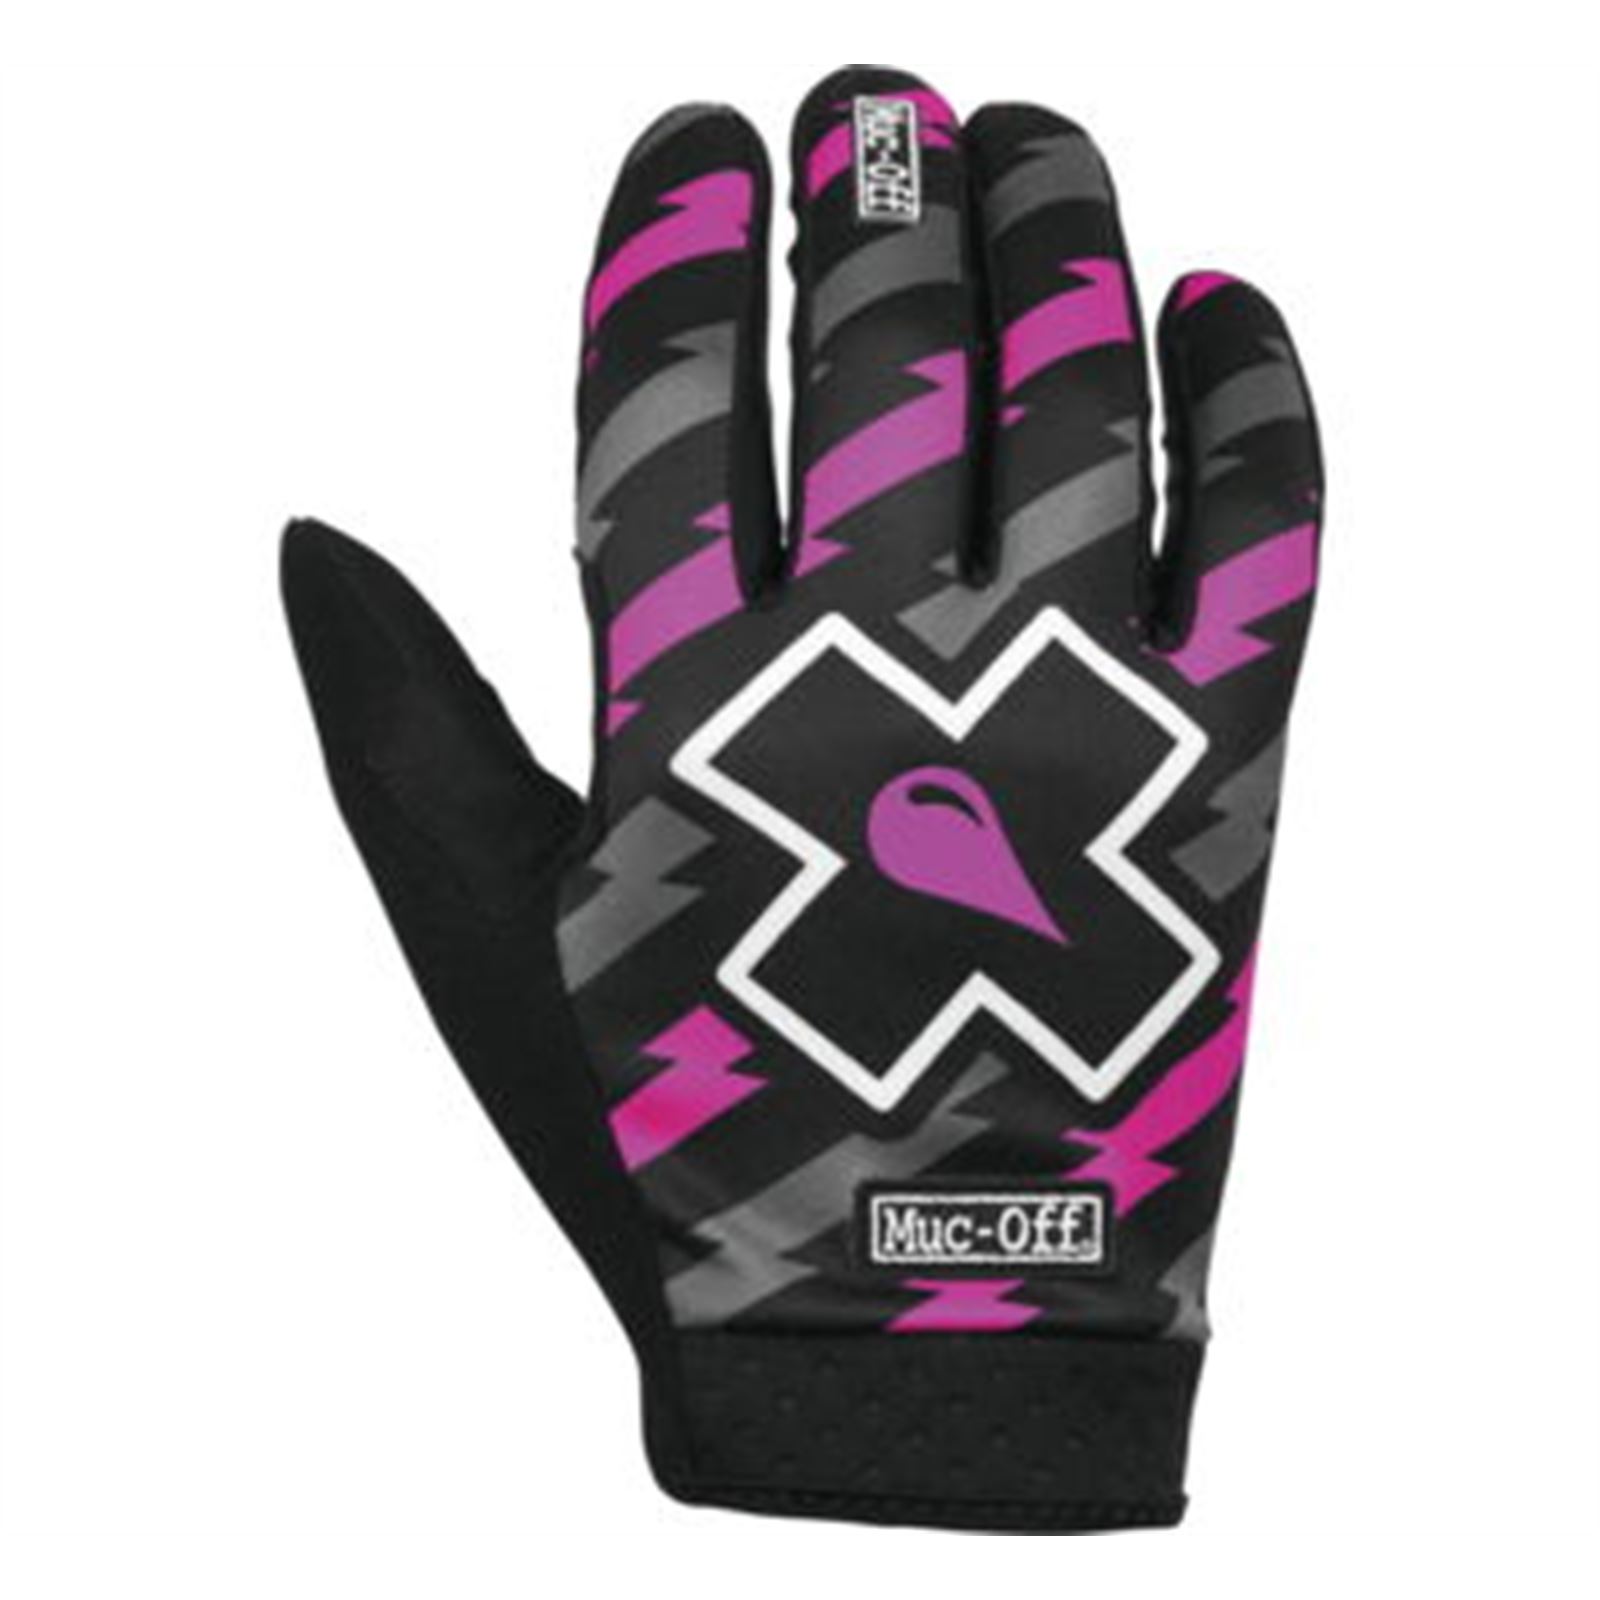 Muc-Off MTB Gloves - Bolt - X-Small